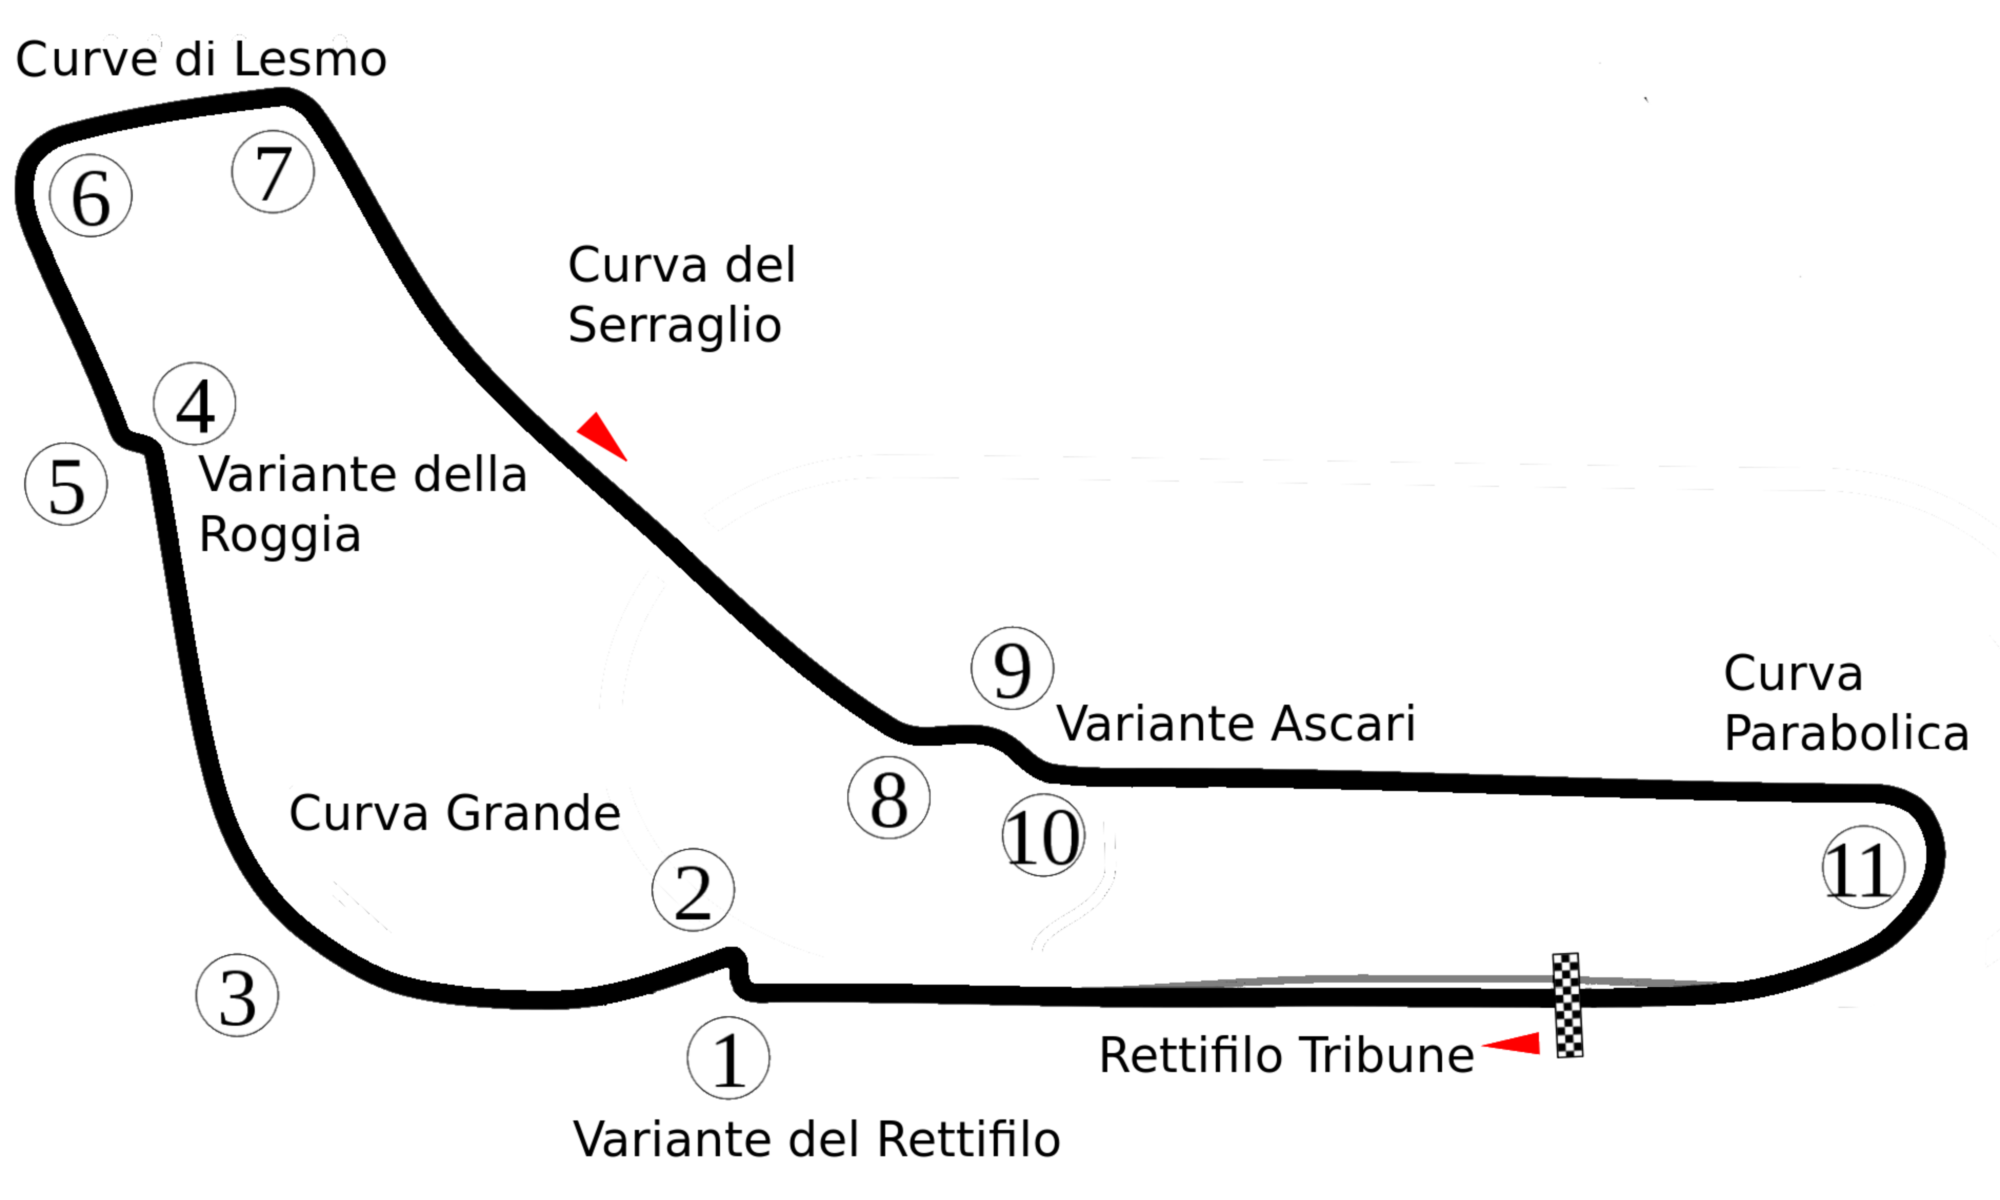 f1-circuito-monza-diagrama.png